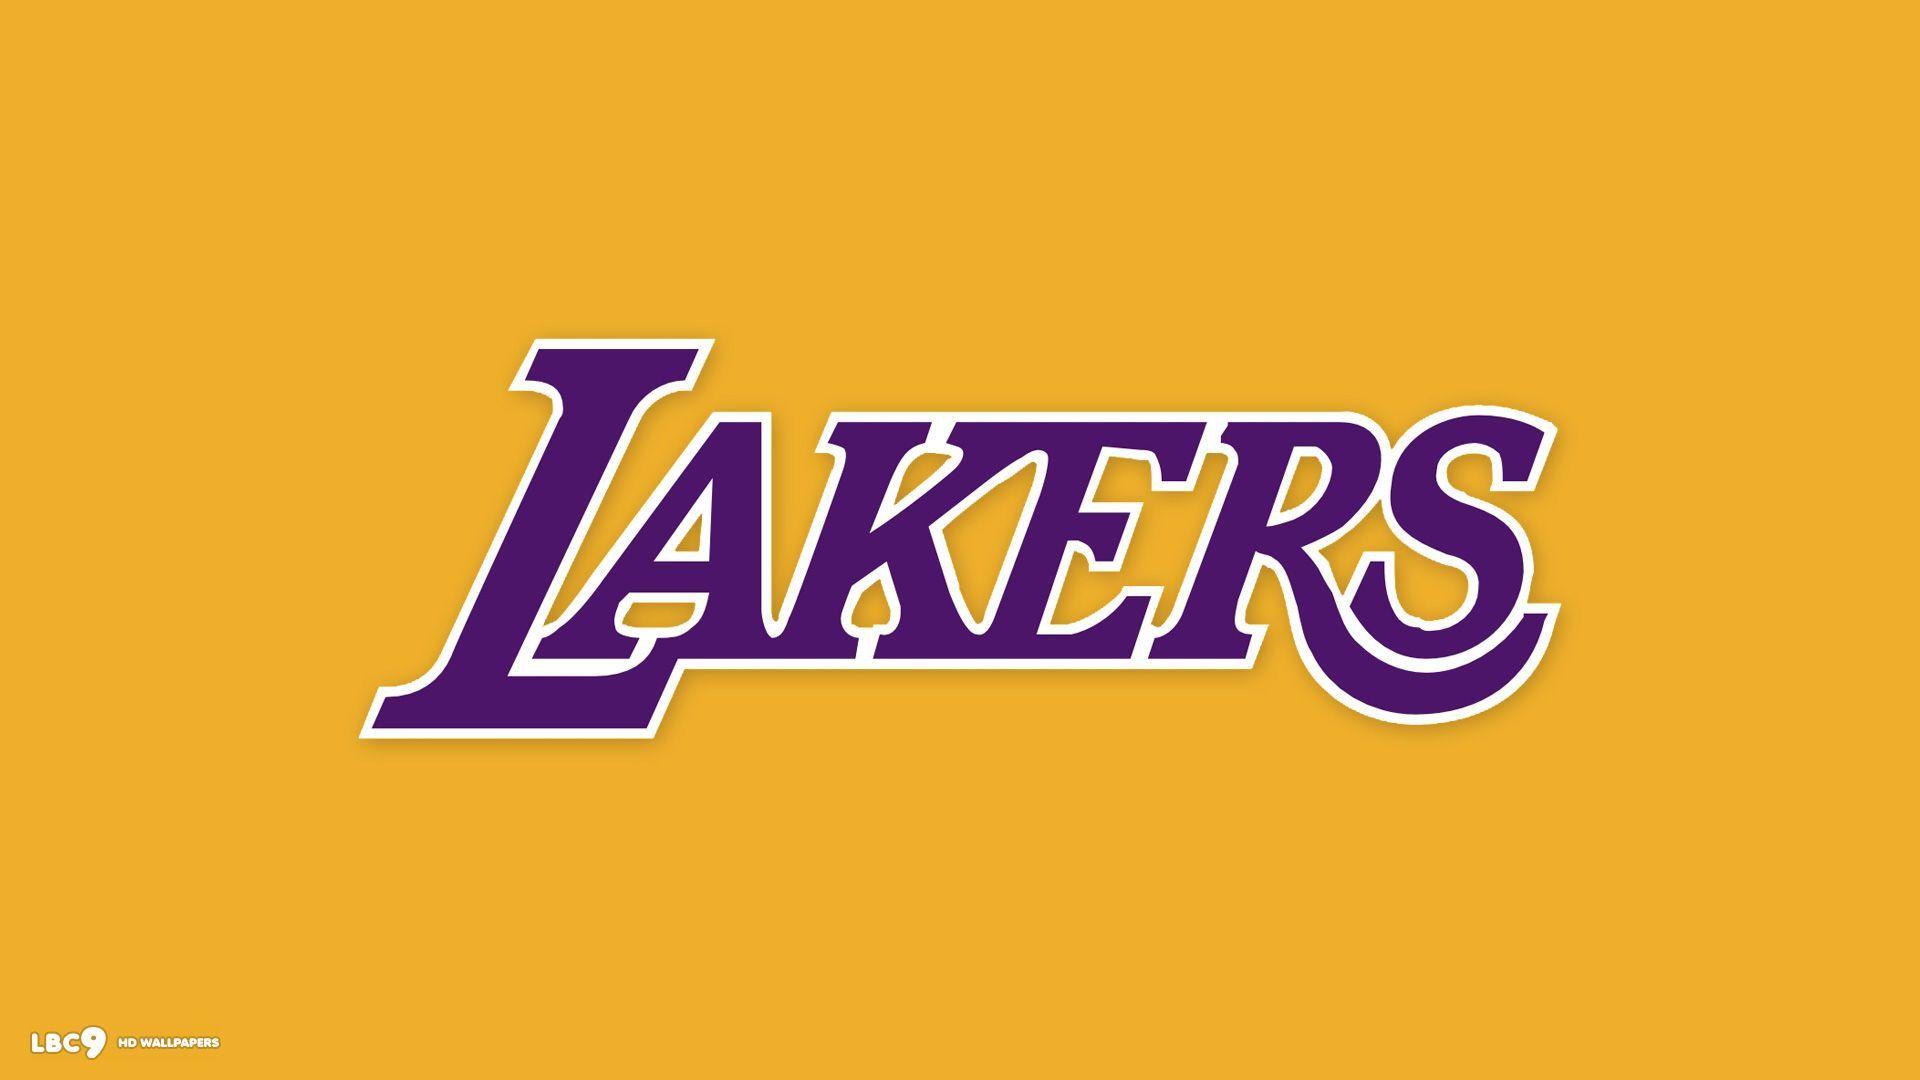 Lakers Wallpaper 1080p Wallpaper HD. Lakers wallpaper, Lakers logo, Los angeles lakers